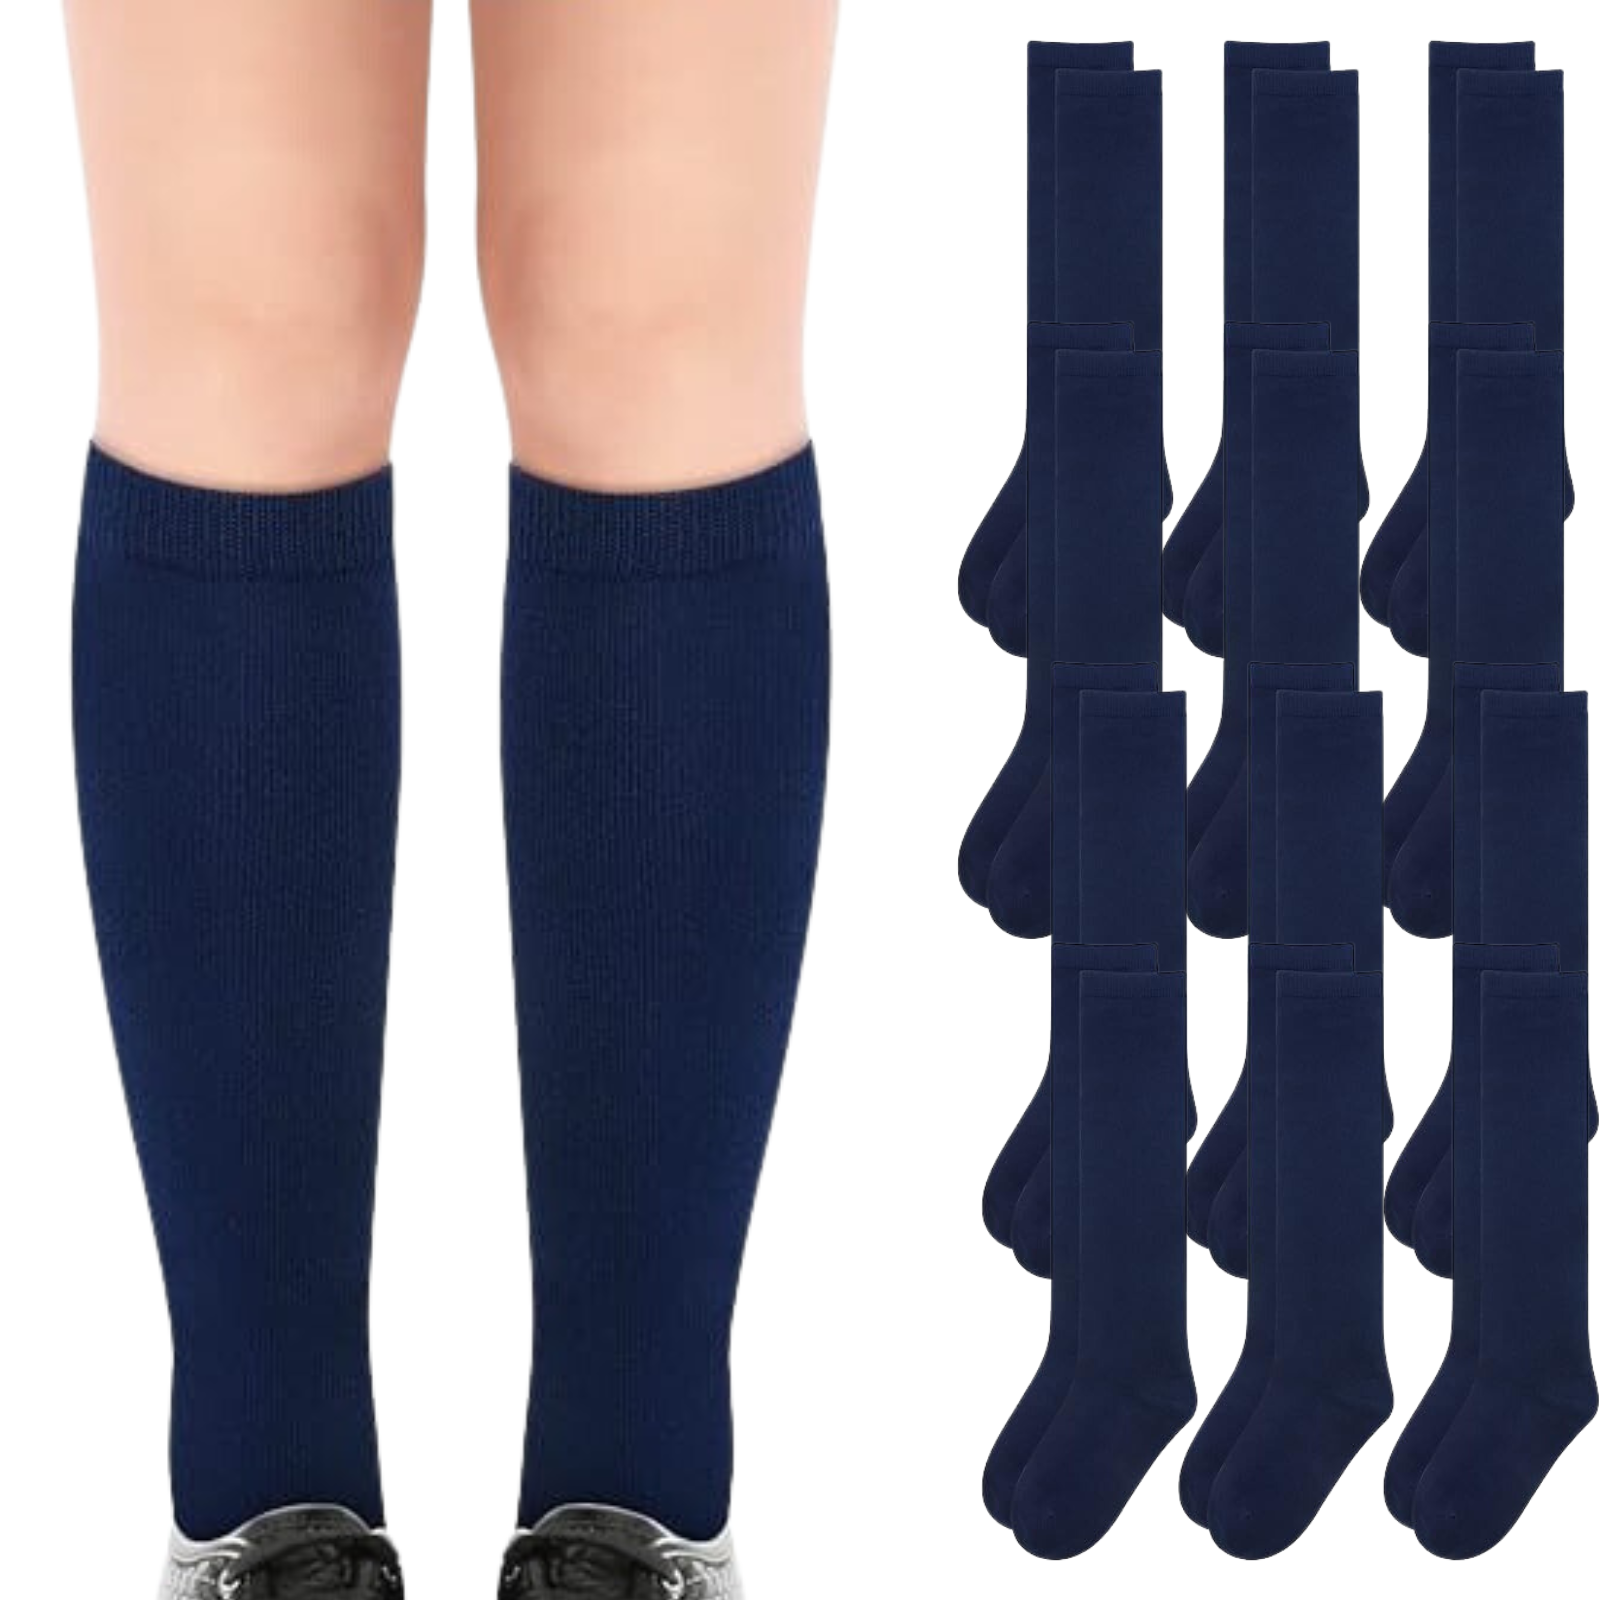 12x Pairs School Uniform Knee High Socks Cotton Rich Girls Boys Kids Bulk - Navy - 9-12 (5-8 Years Old)